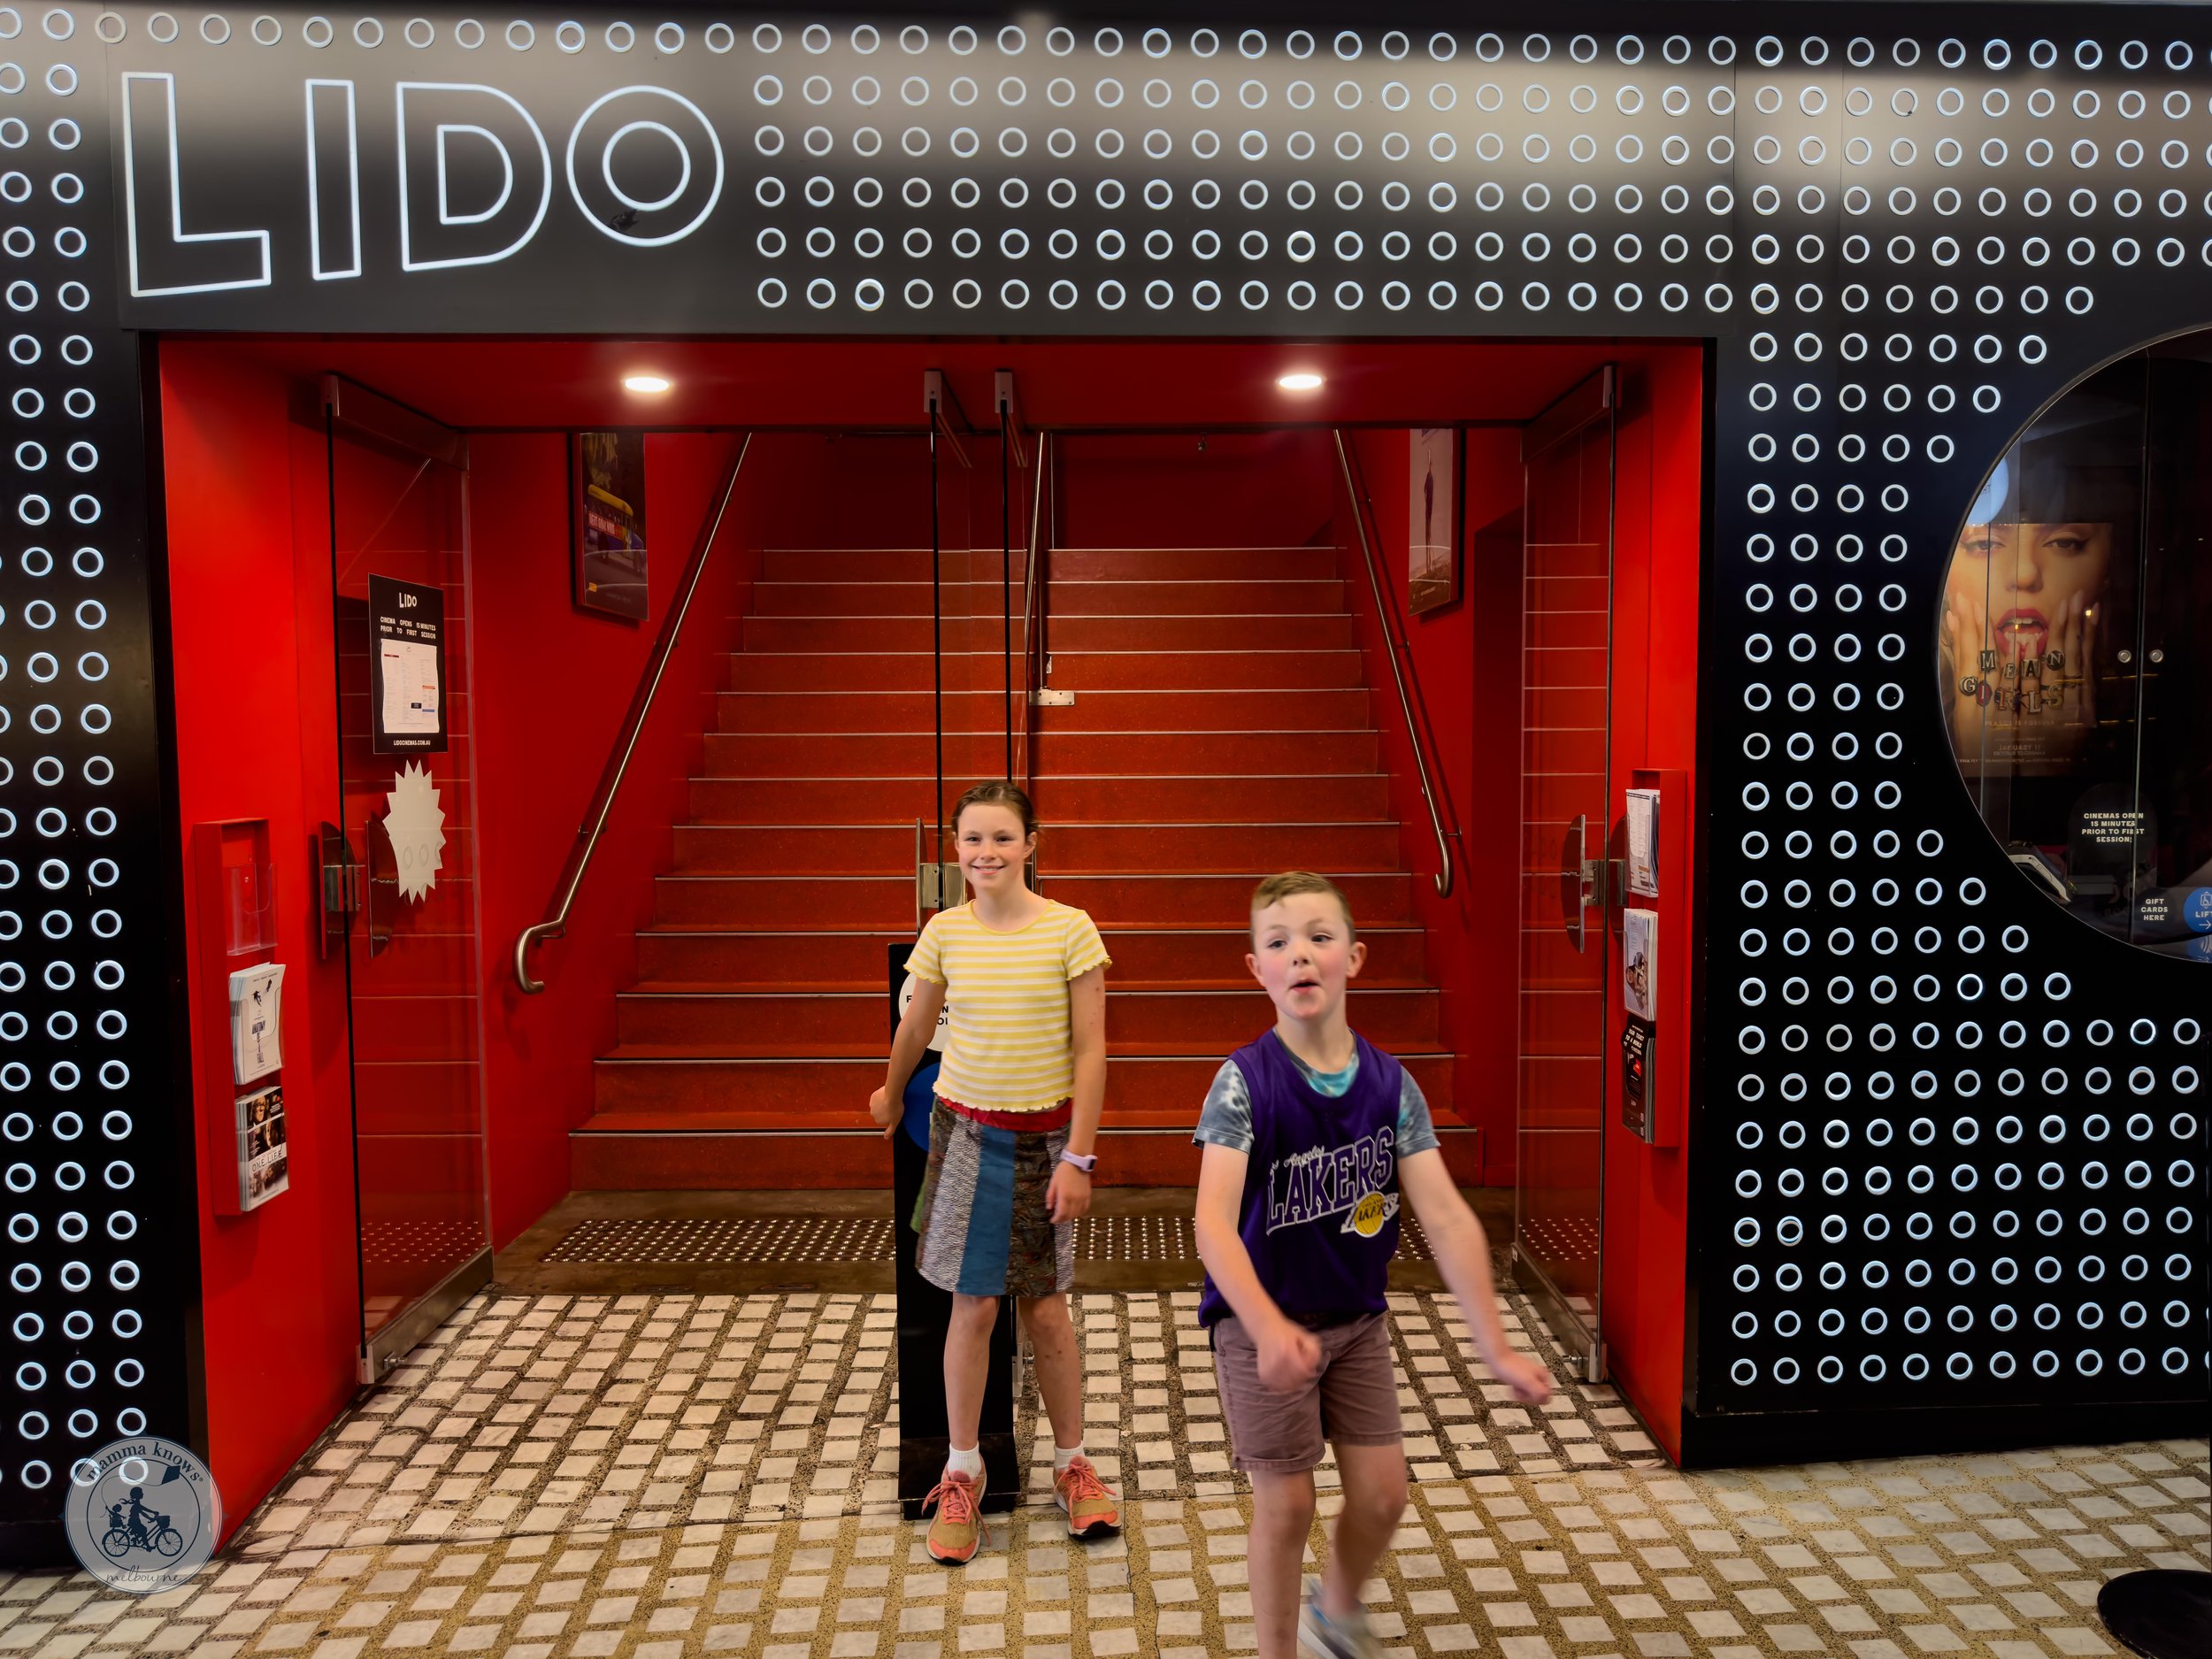 Lido Cinema, Hawthorn